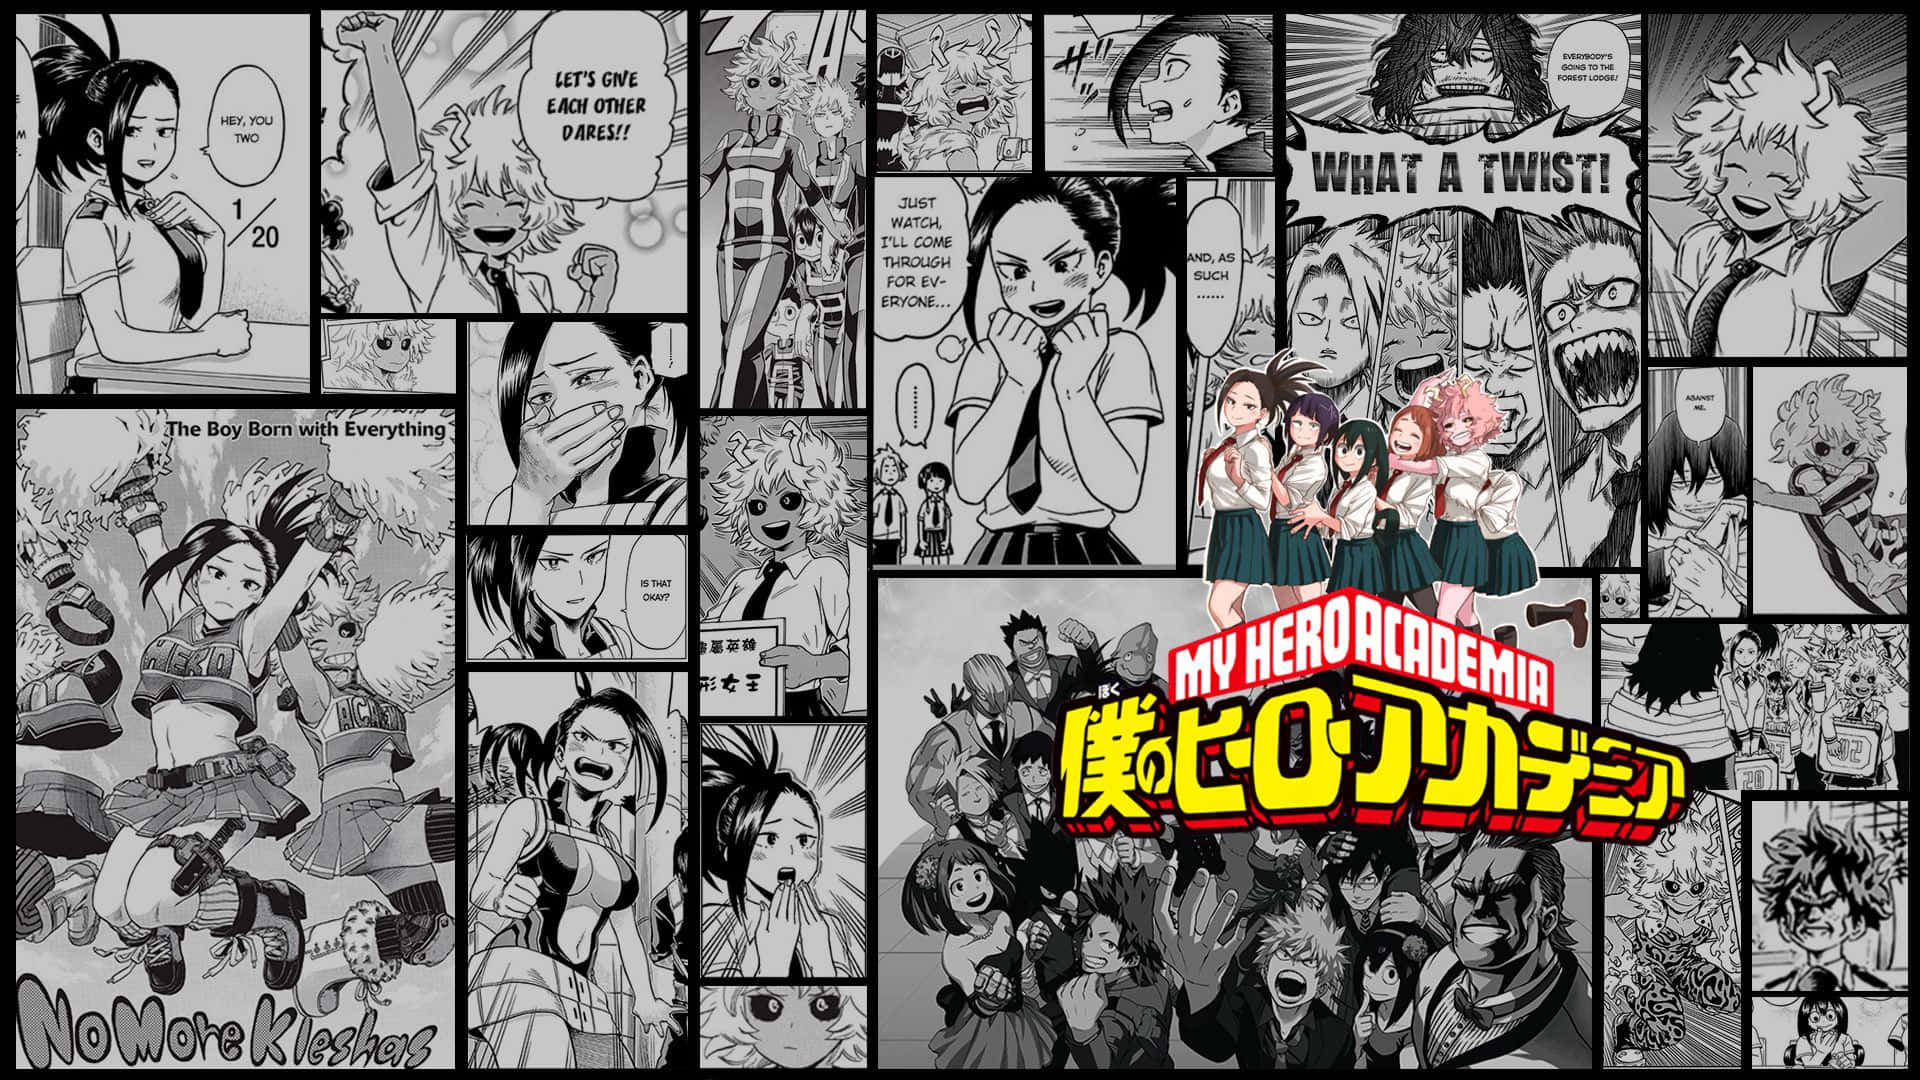 Manga Sider 1920 X 1080 Wallpaper